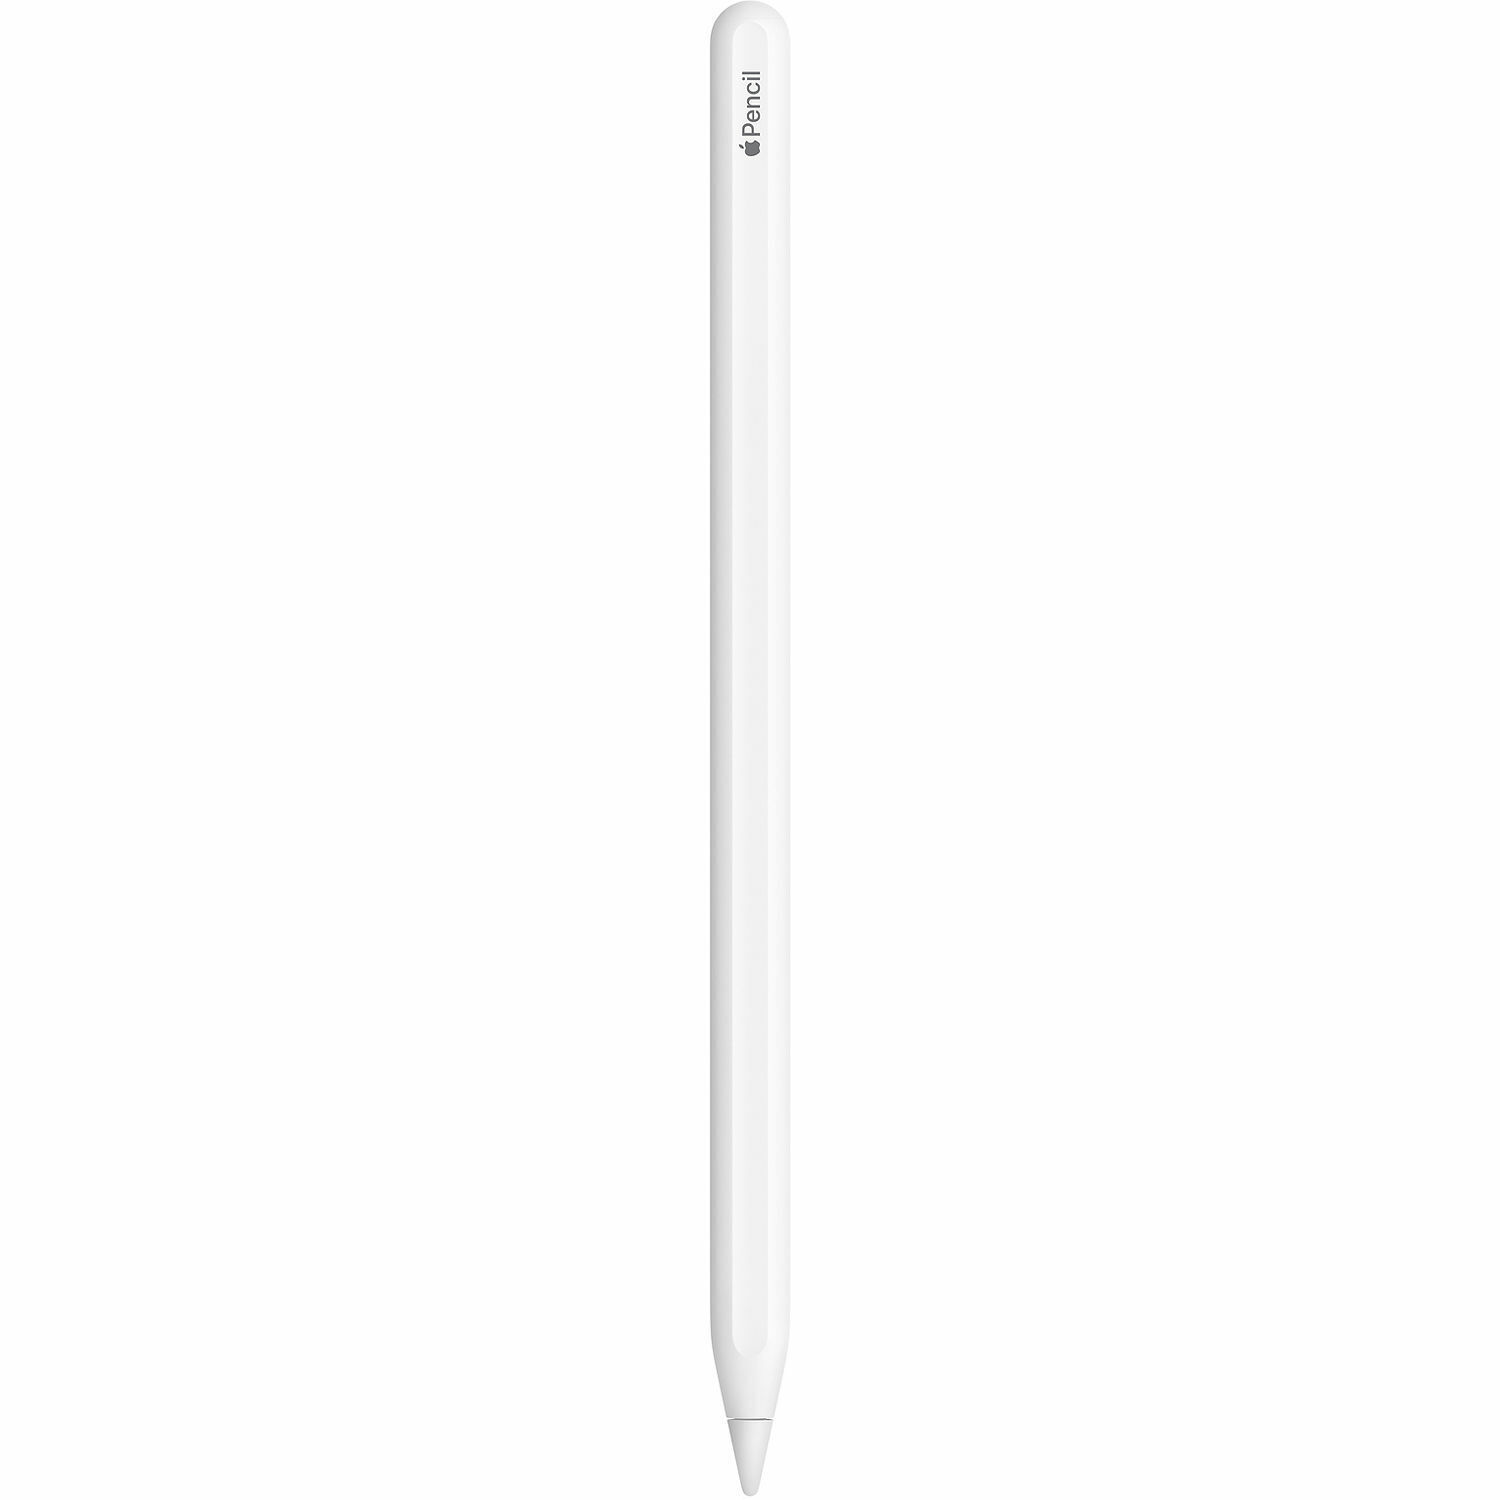 Apple MU8F2AM/A Pencil (2nd Gen) iPad Stylus